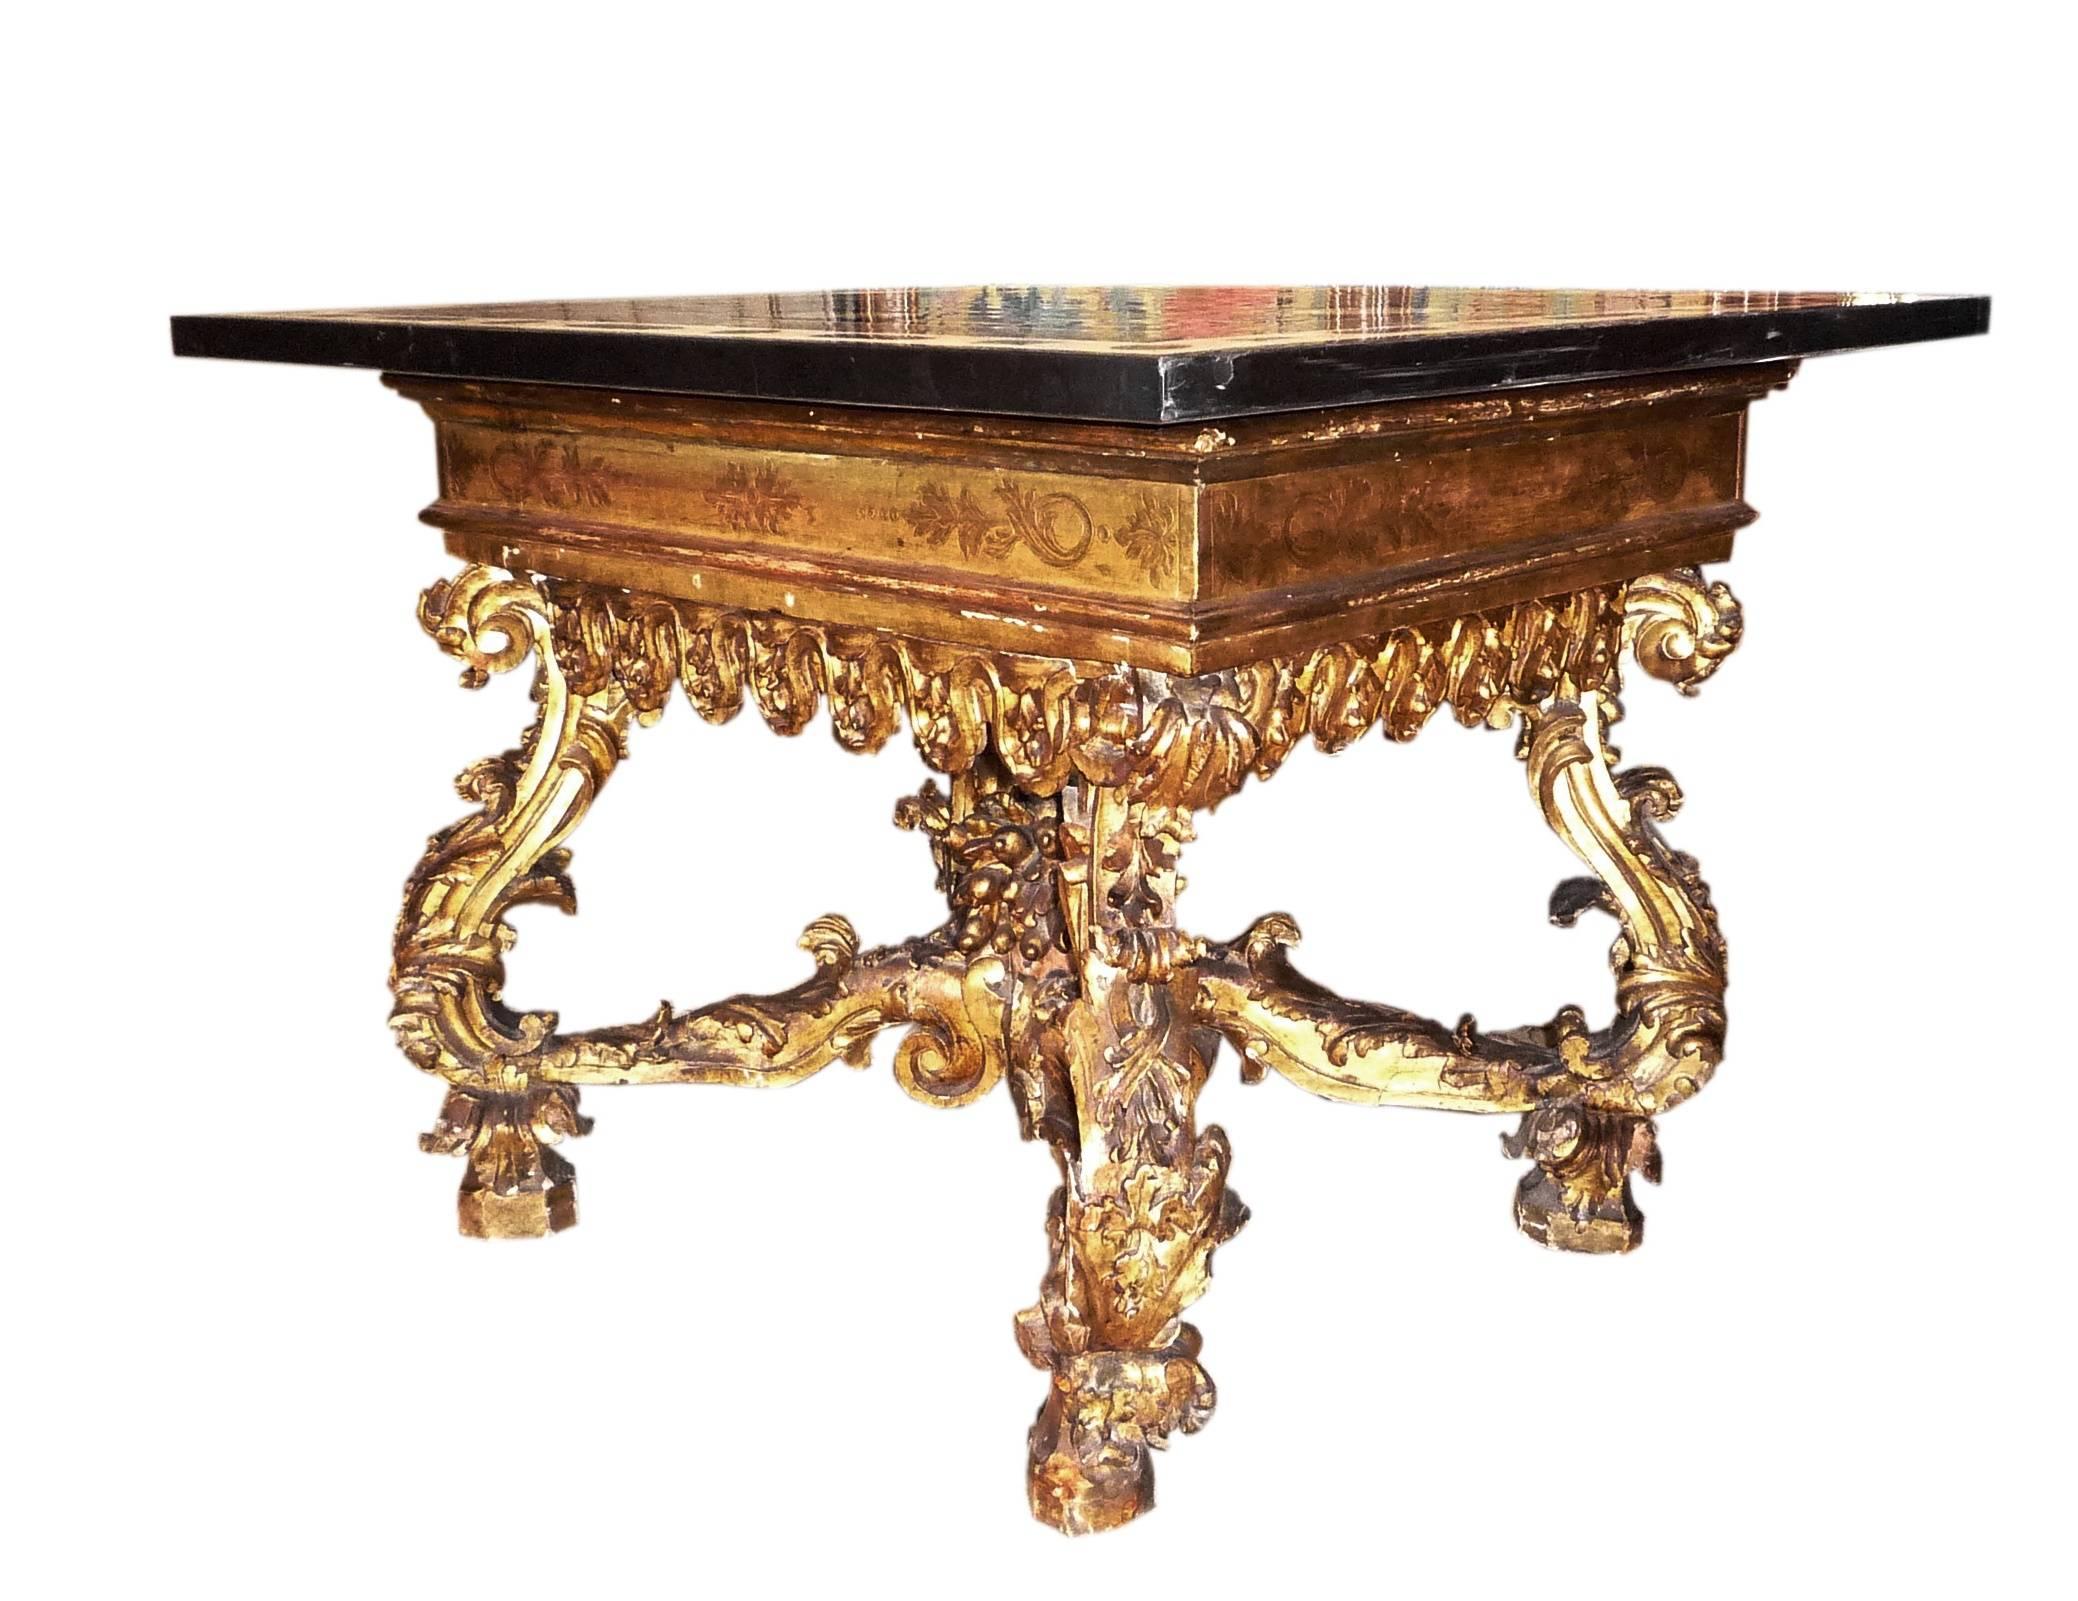 Italian Fine 18th Century Roman Baroque Table with a 19th Century Pietra Dura Top